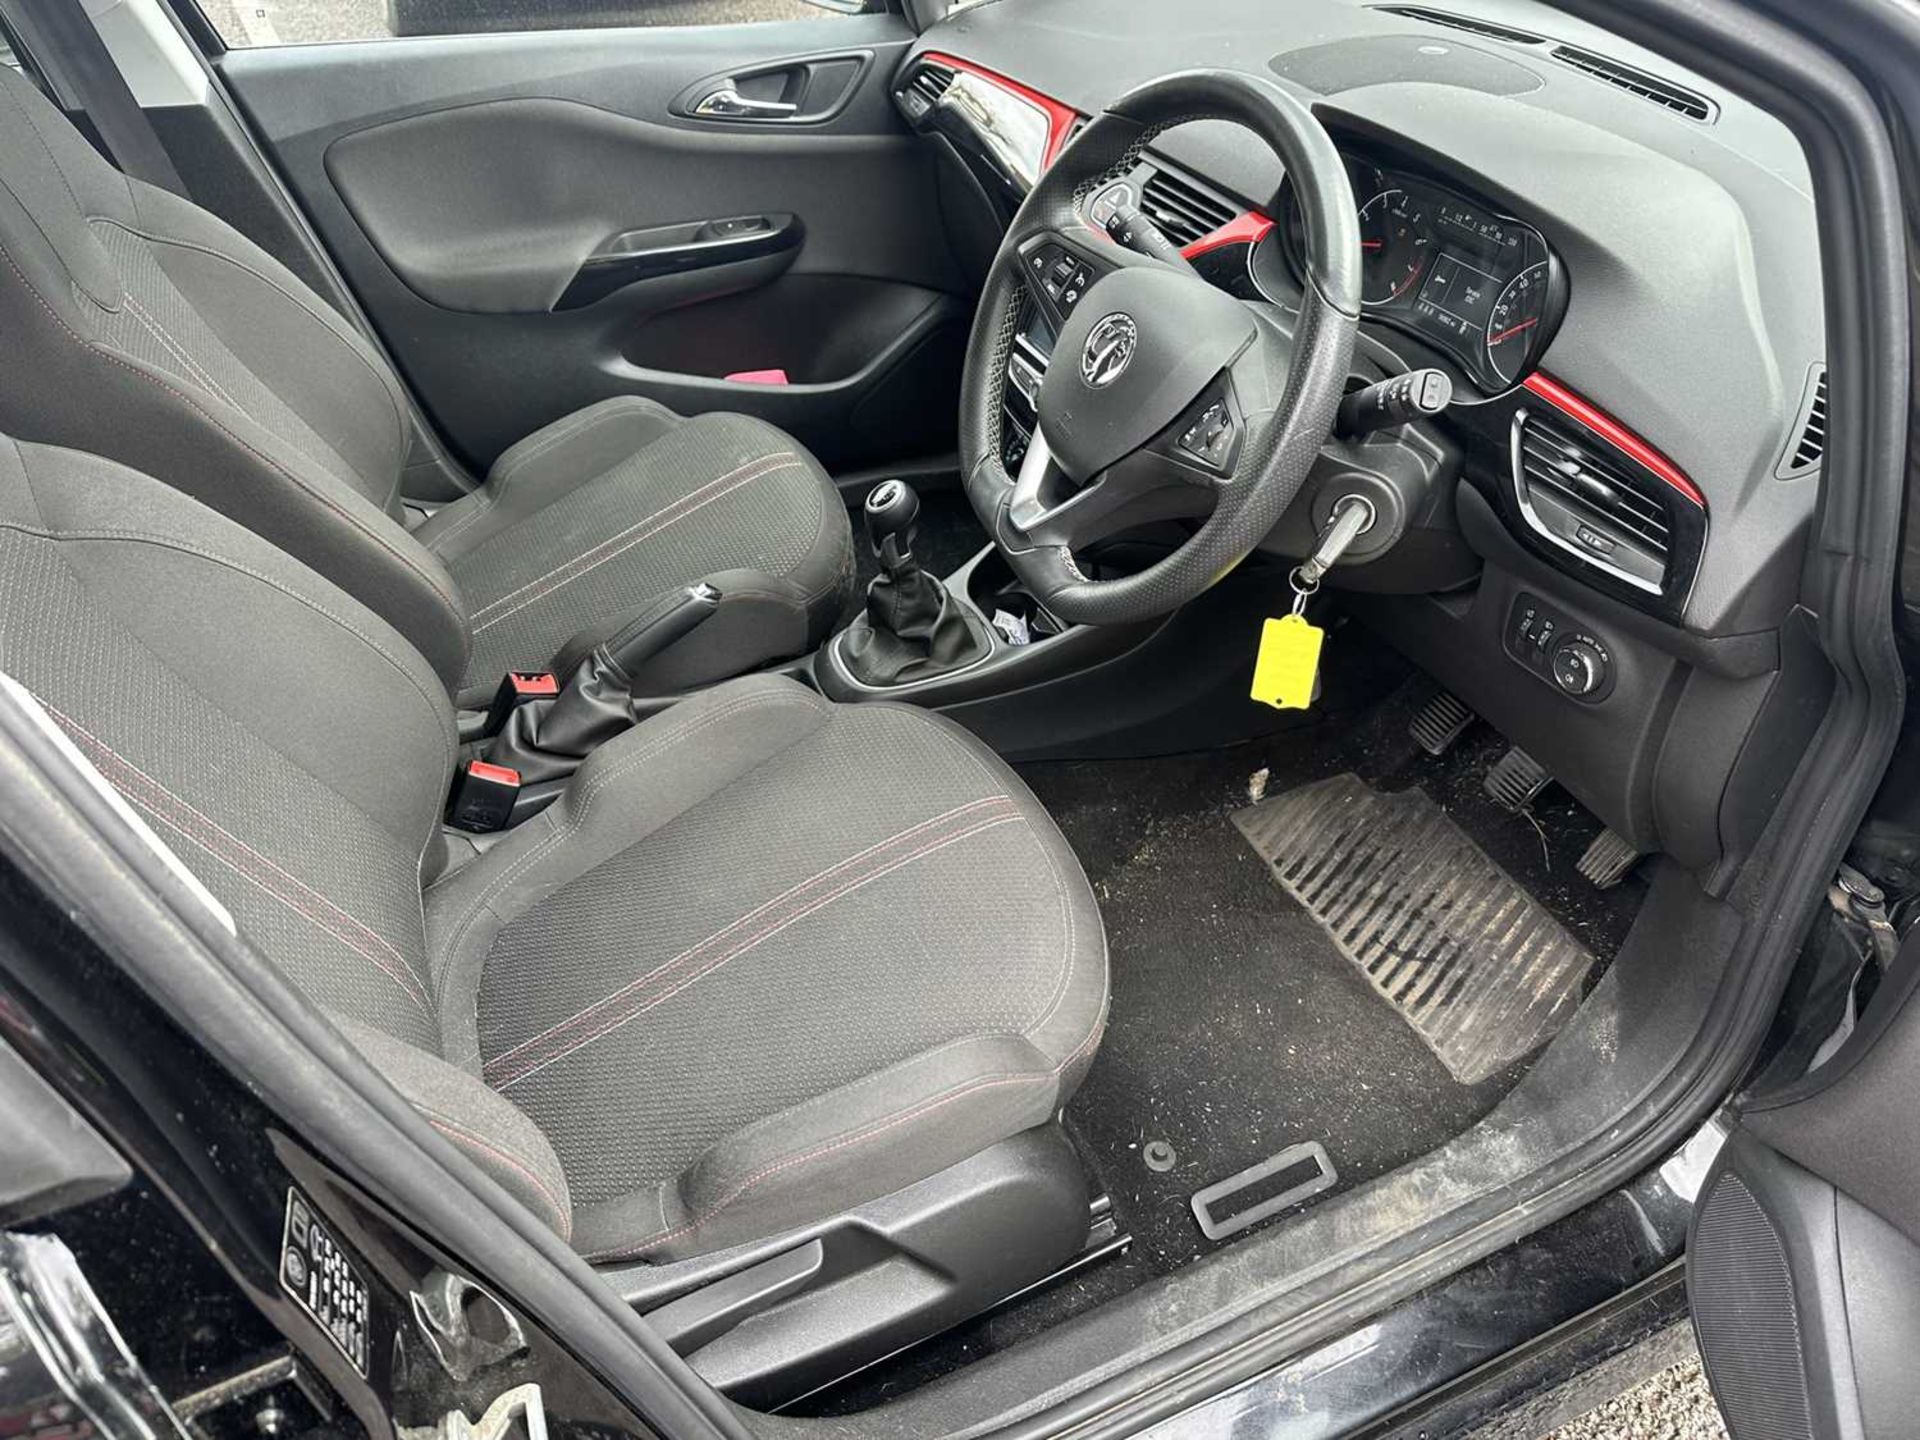 2019 Vauxhall Corsa SRI VX - Line Nav Black, 5 door hatchback, manual, reg. no. VU19 RYK - Bild 12 aus 15